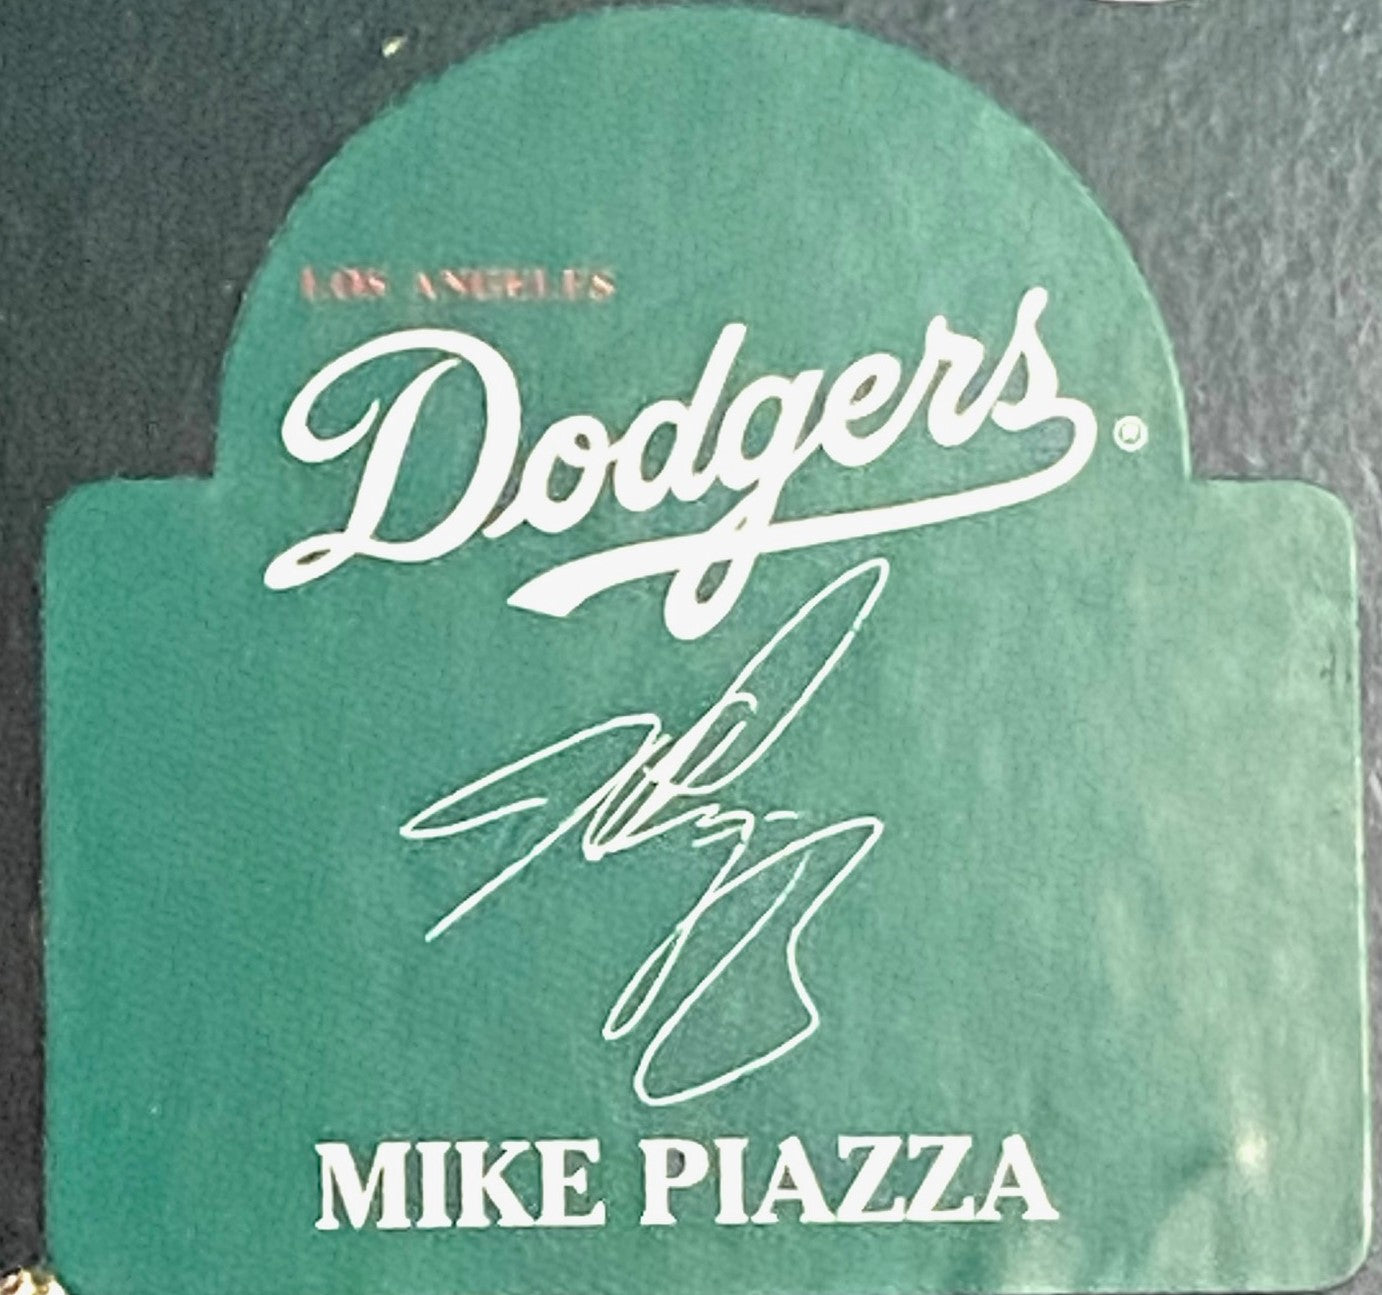 Mike Piazza 1996 MLB Los Angeles Dodgers Headliner Figurine by Corinthian